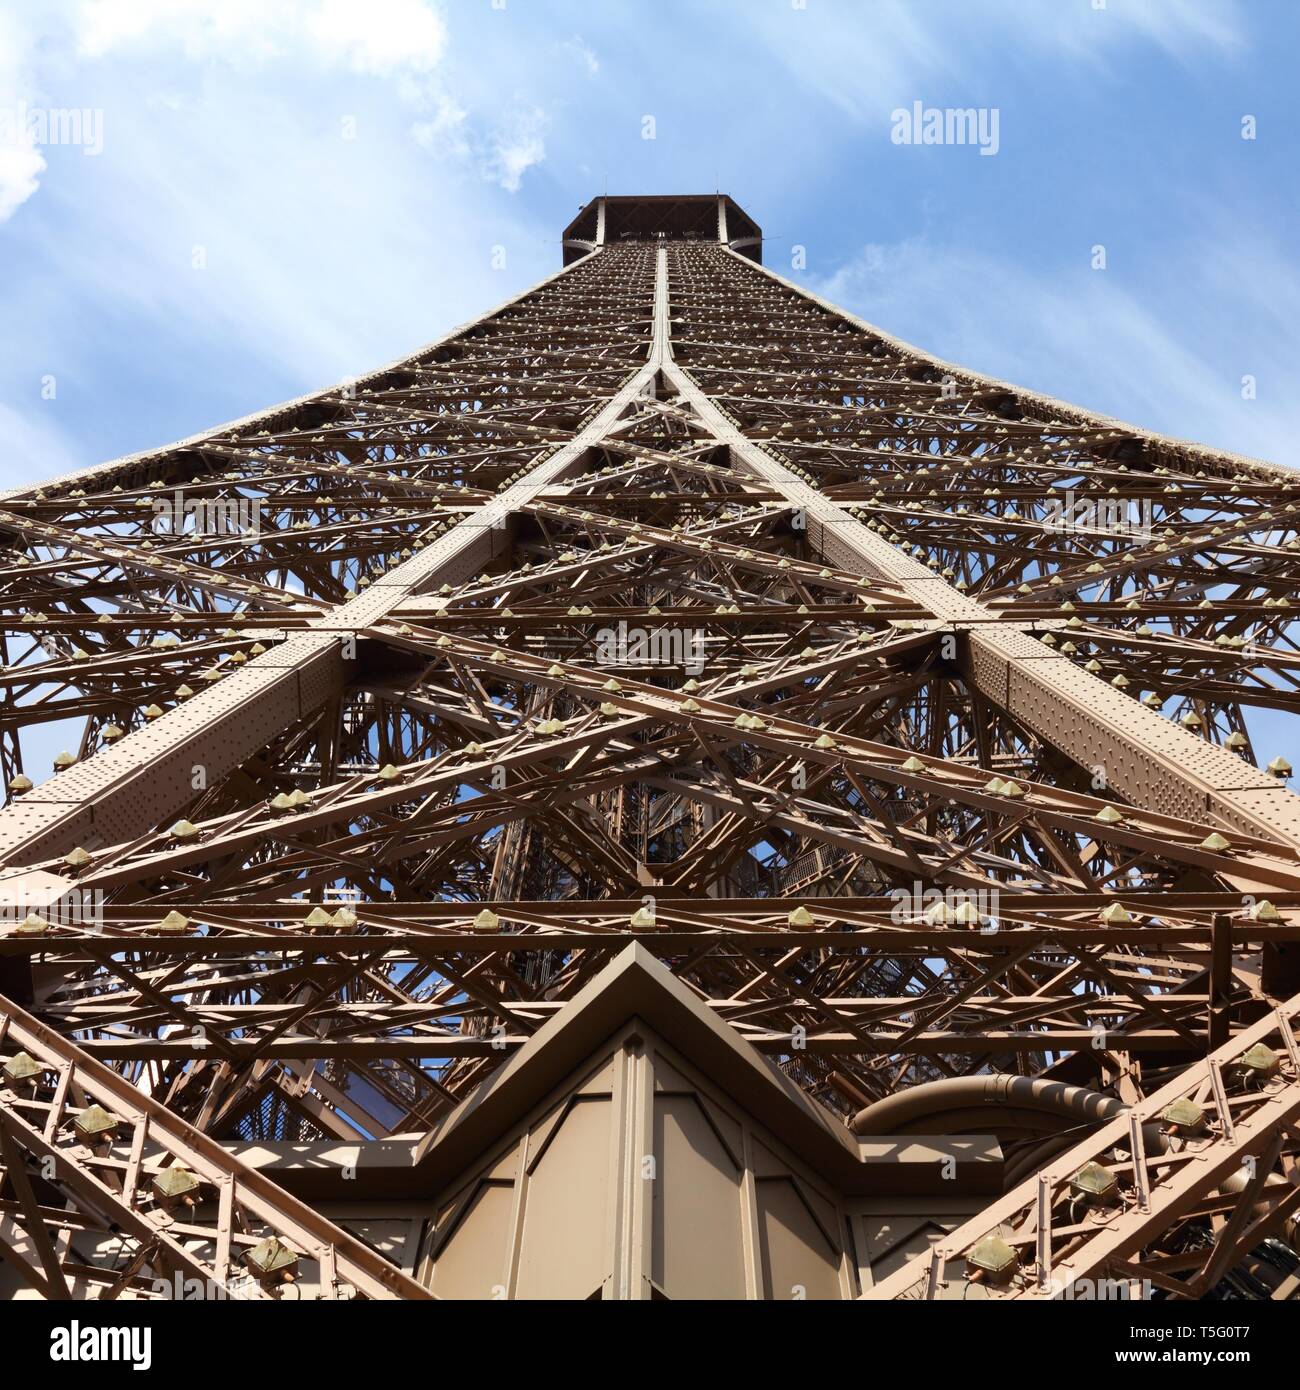 Paris, France - Eiffel Tower top. UNESCO World Heritage Site. Square composition. Stock Photo